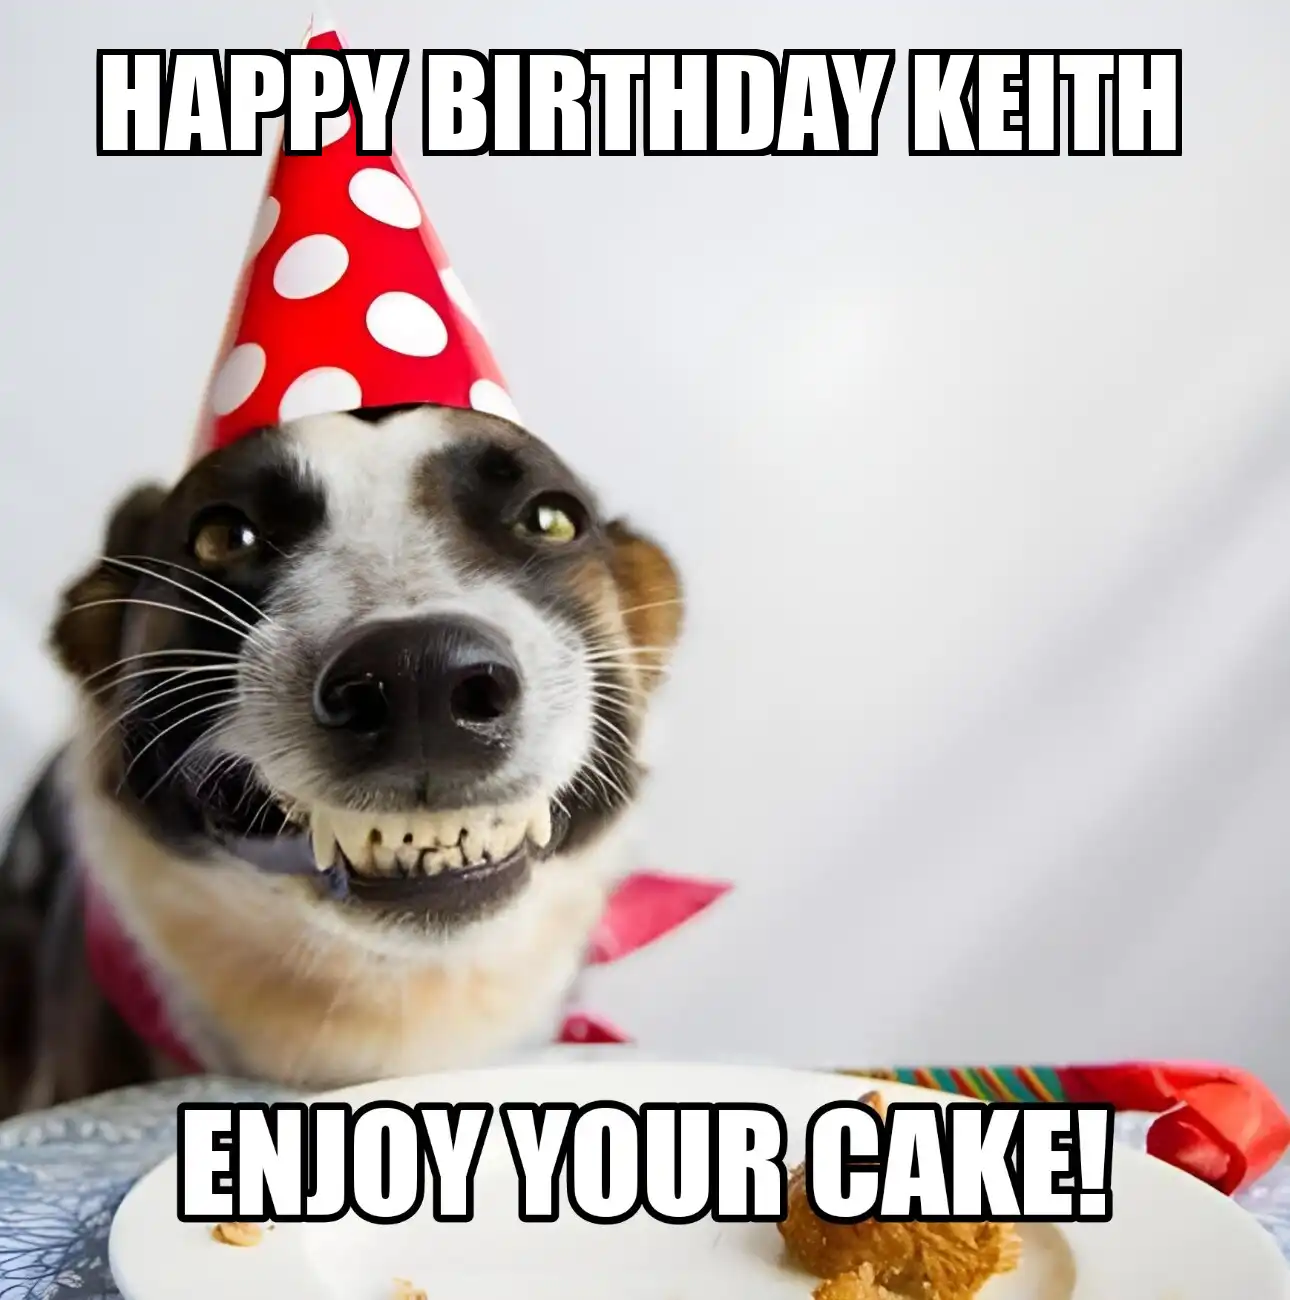 Happy Birthday Keith Enjoy Your Cake Dog Meme